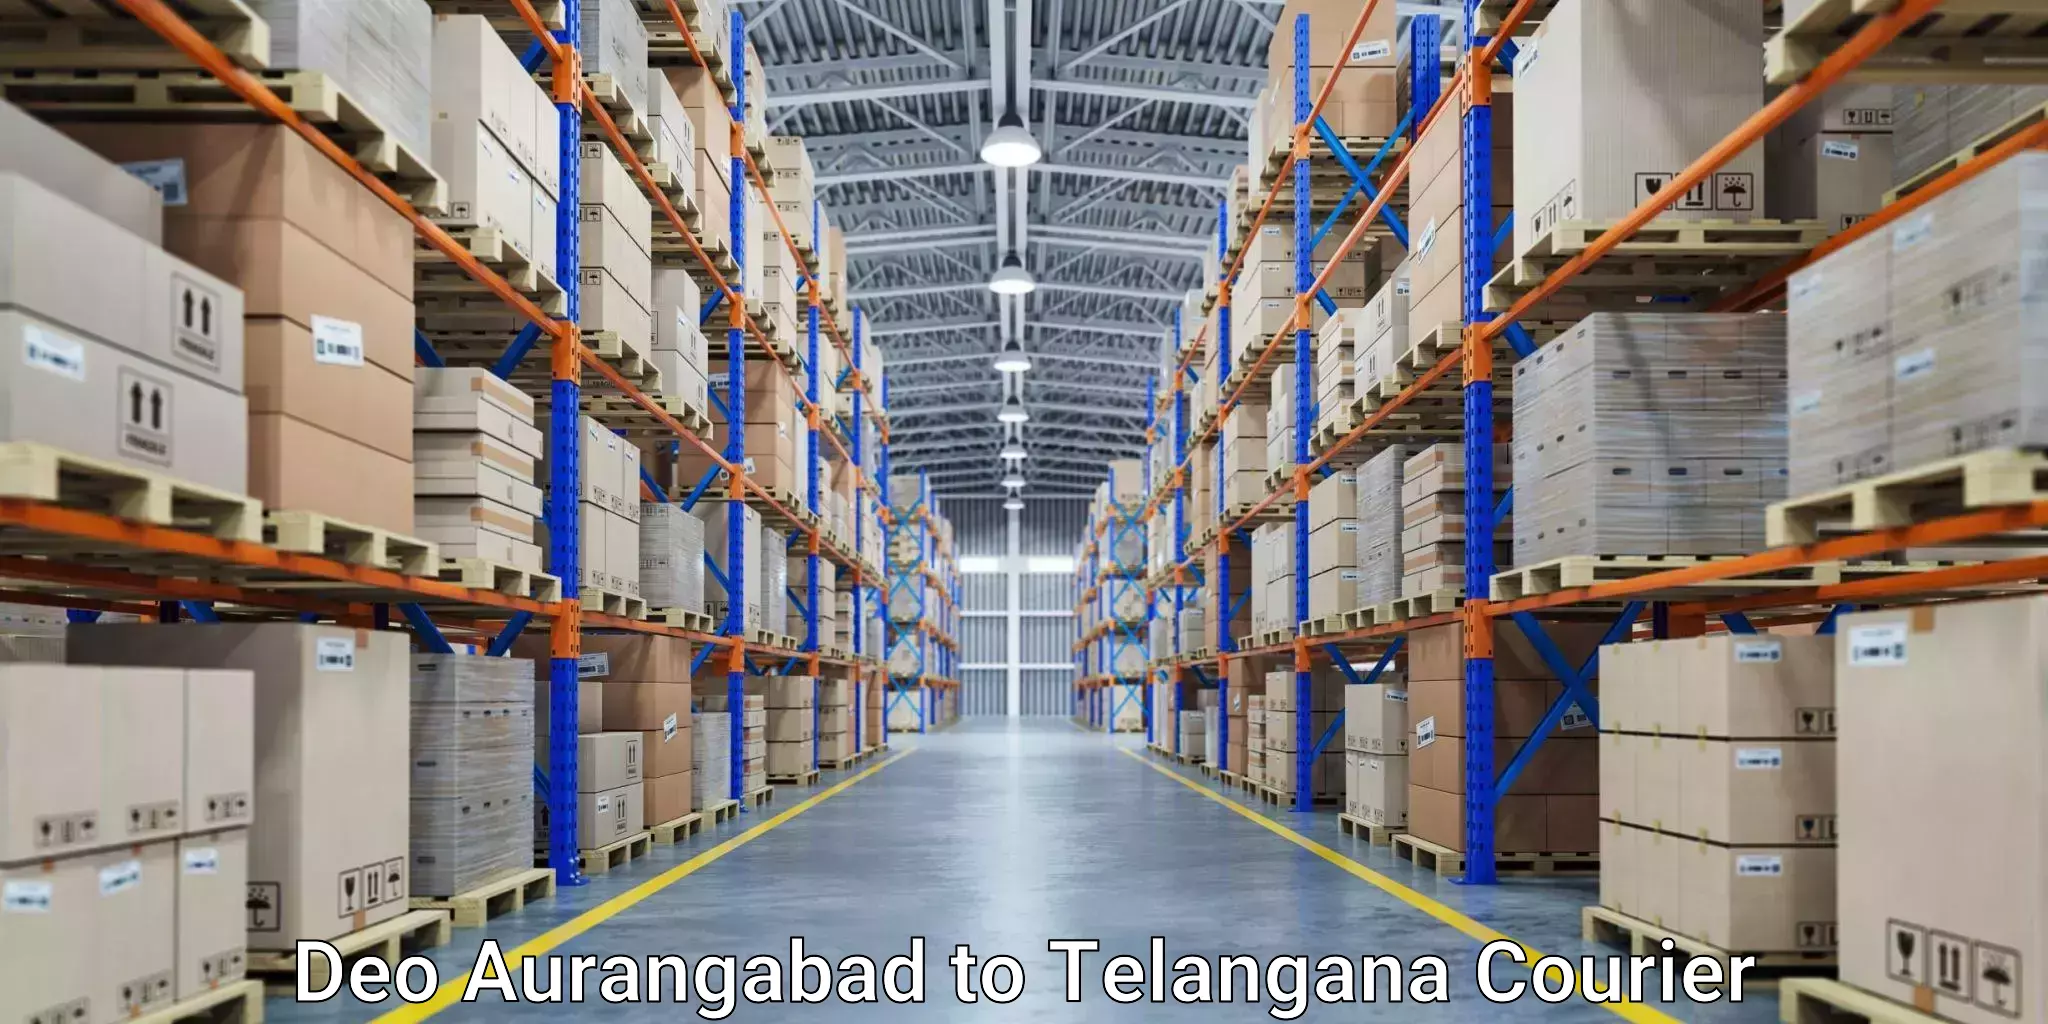 Express mail solutions Deo Aurangabad to Tiryani